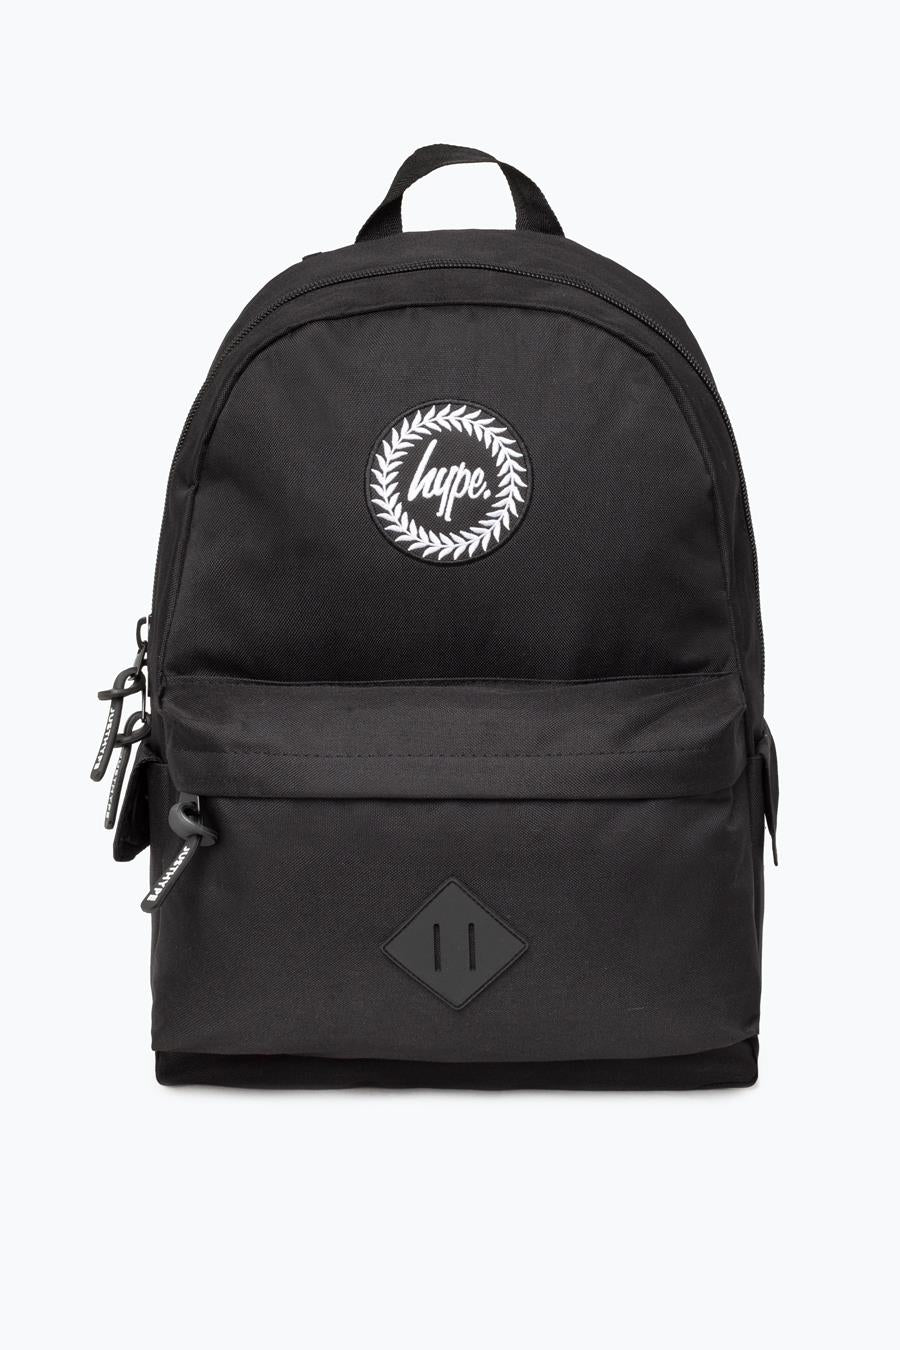 hype black midi backpack